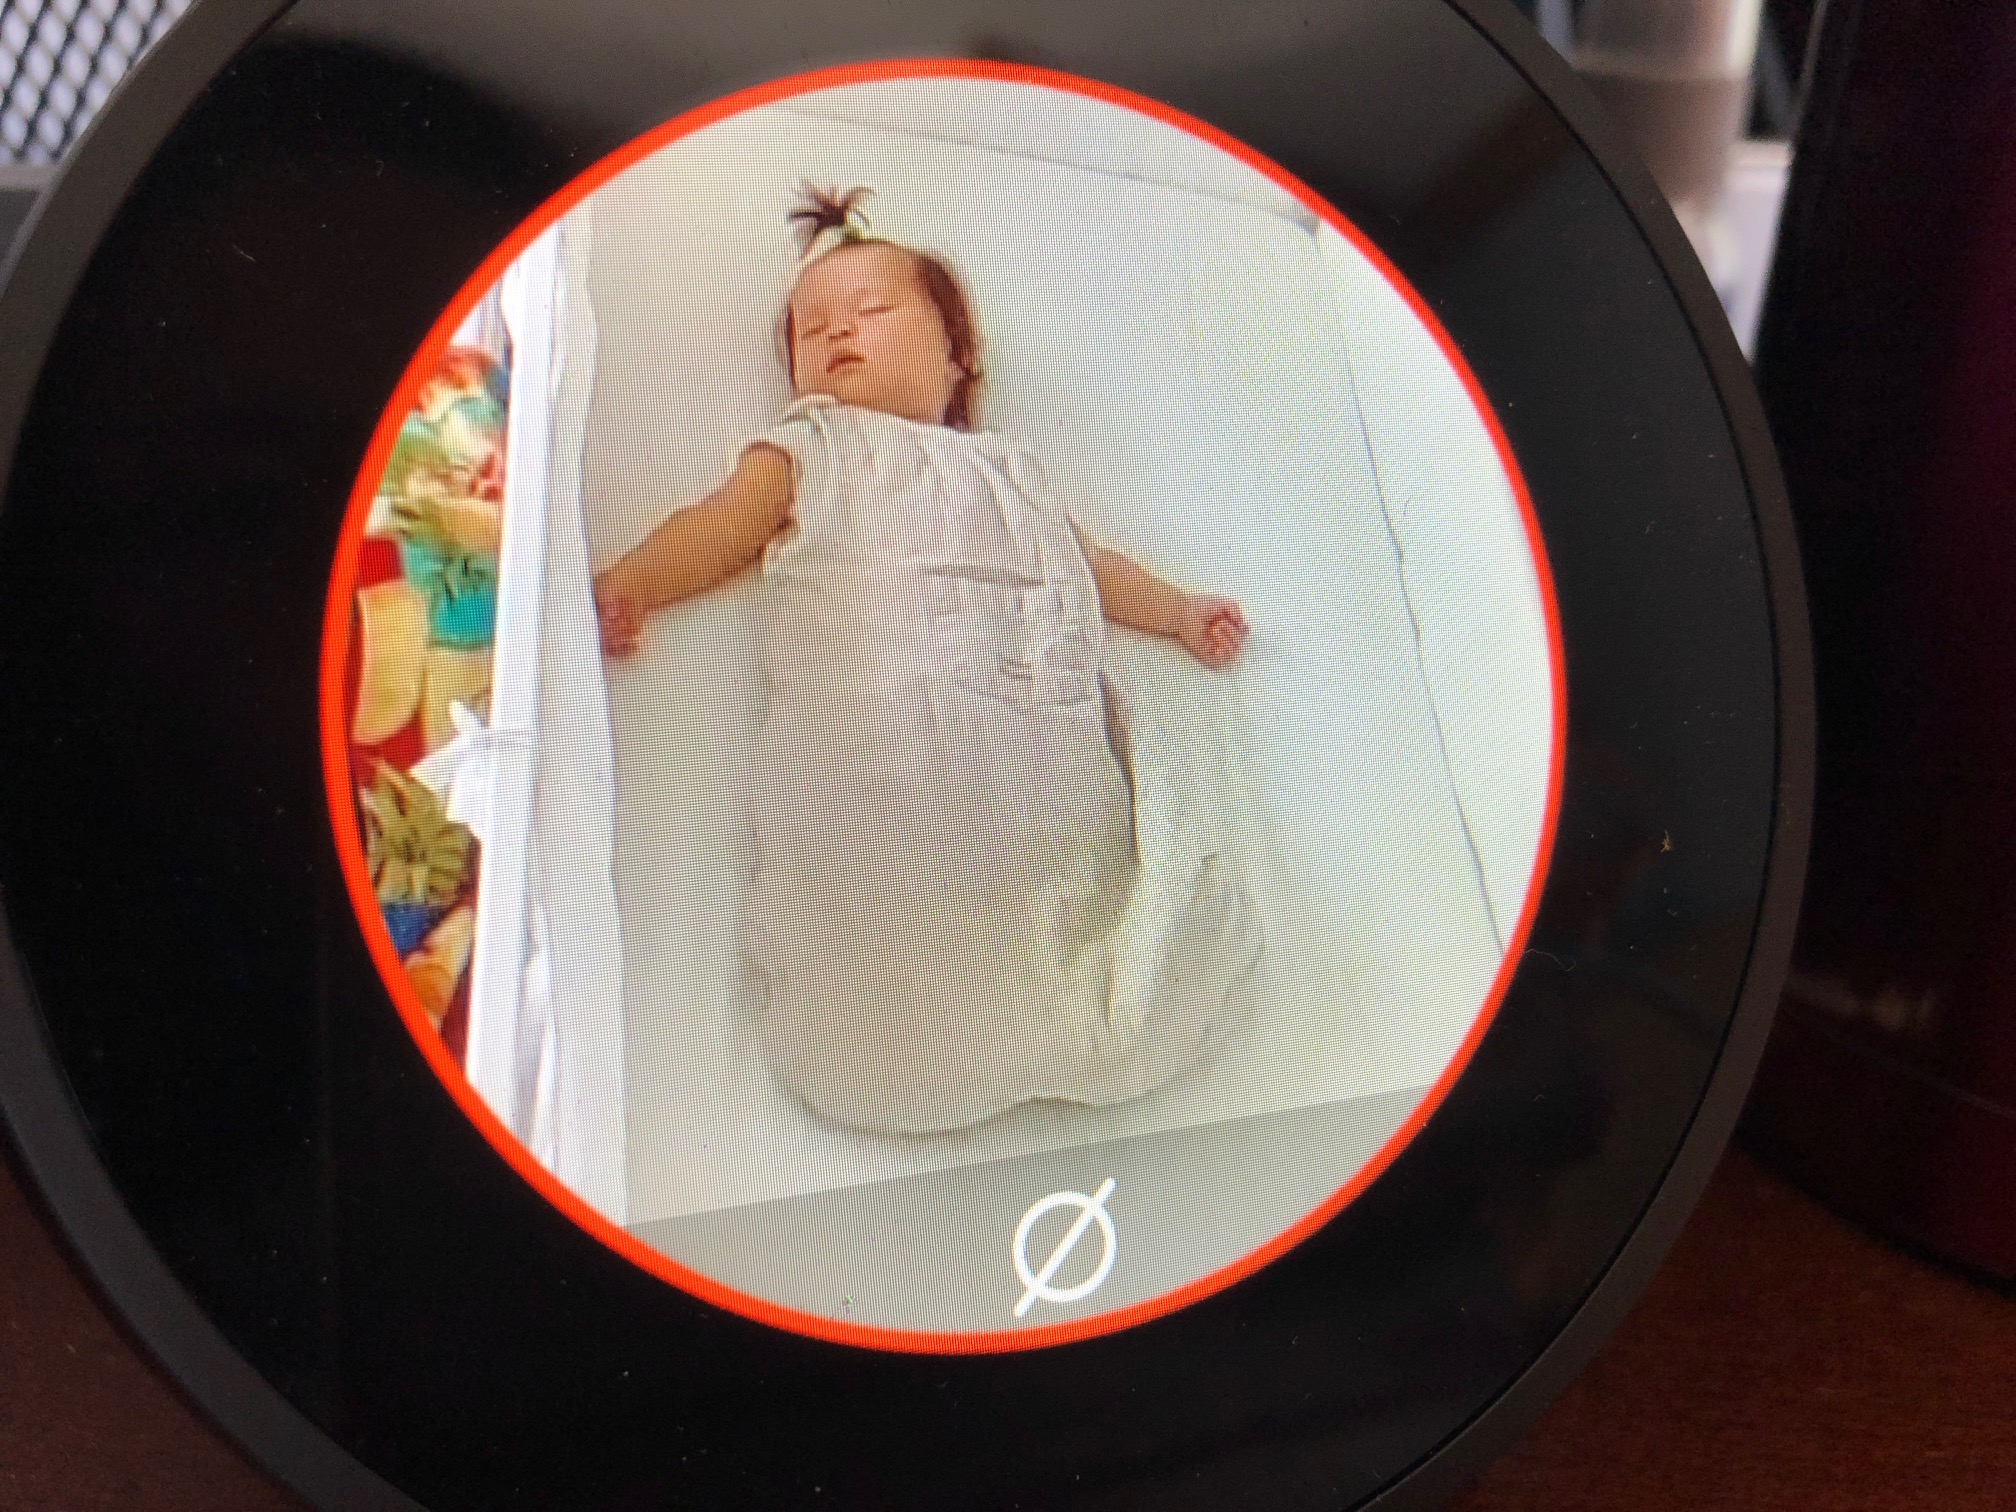 View of Baby Through Sleep Monitor While Sleep Training